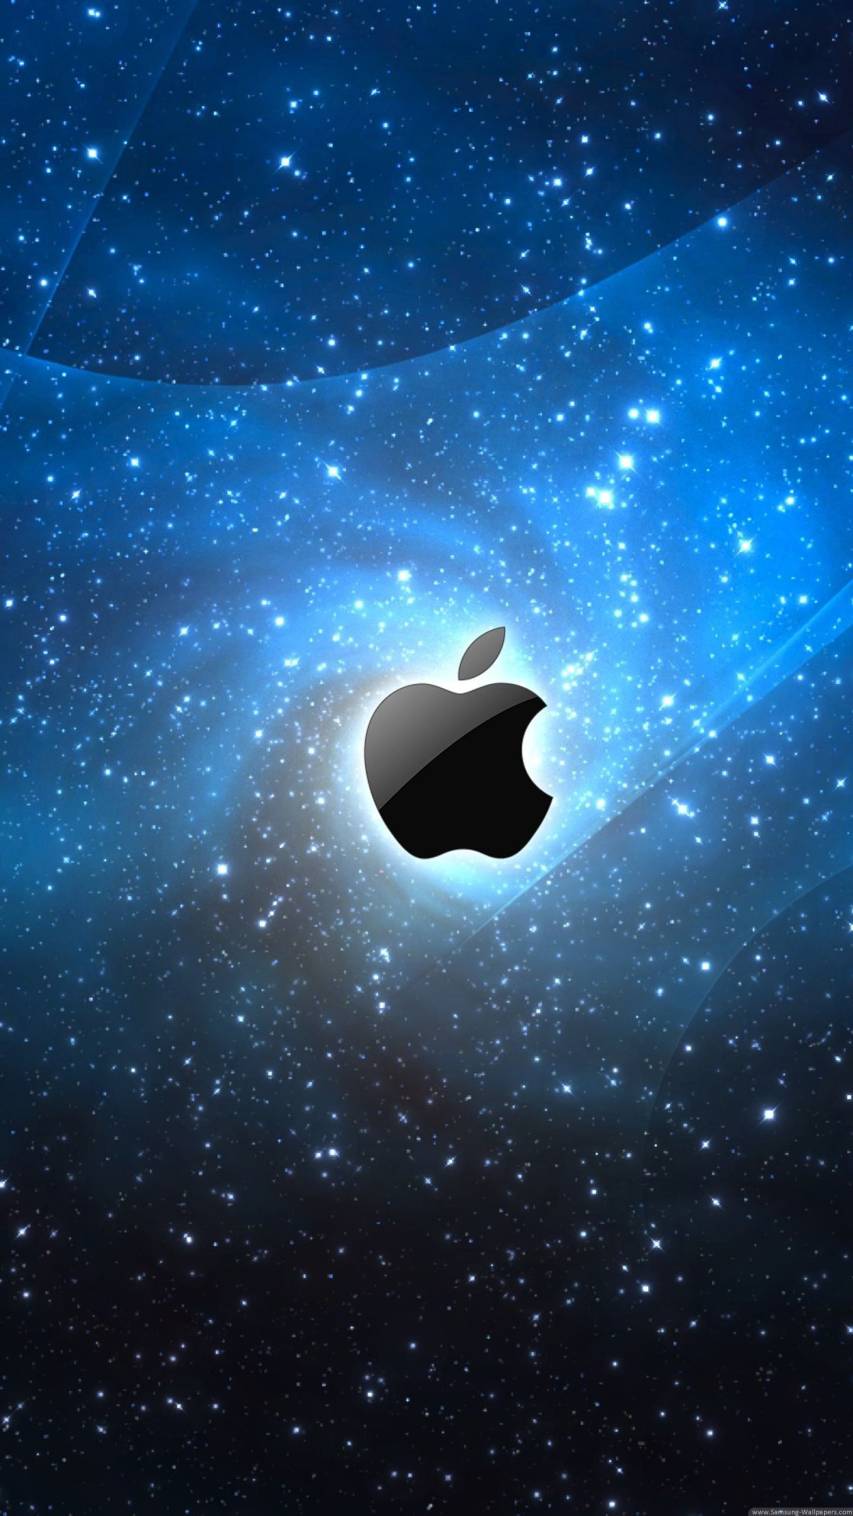 Cool Apple Logo Wallpaper images for iPhone Lockscreens